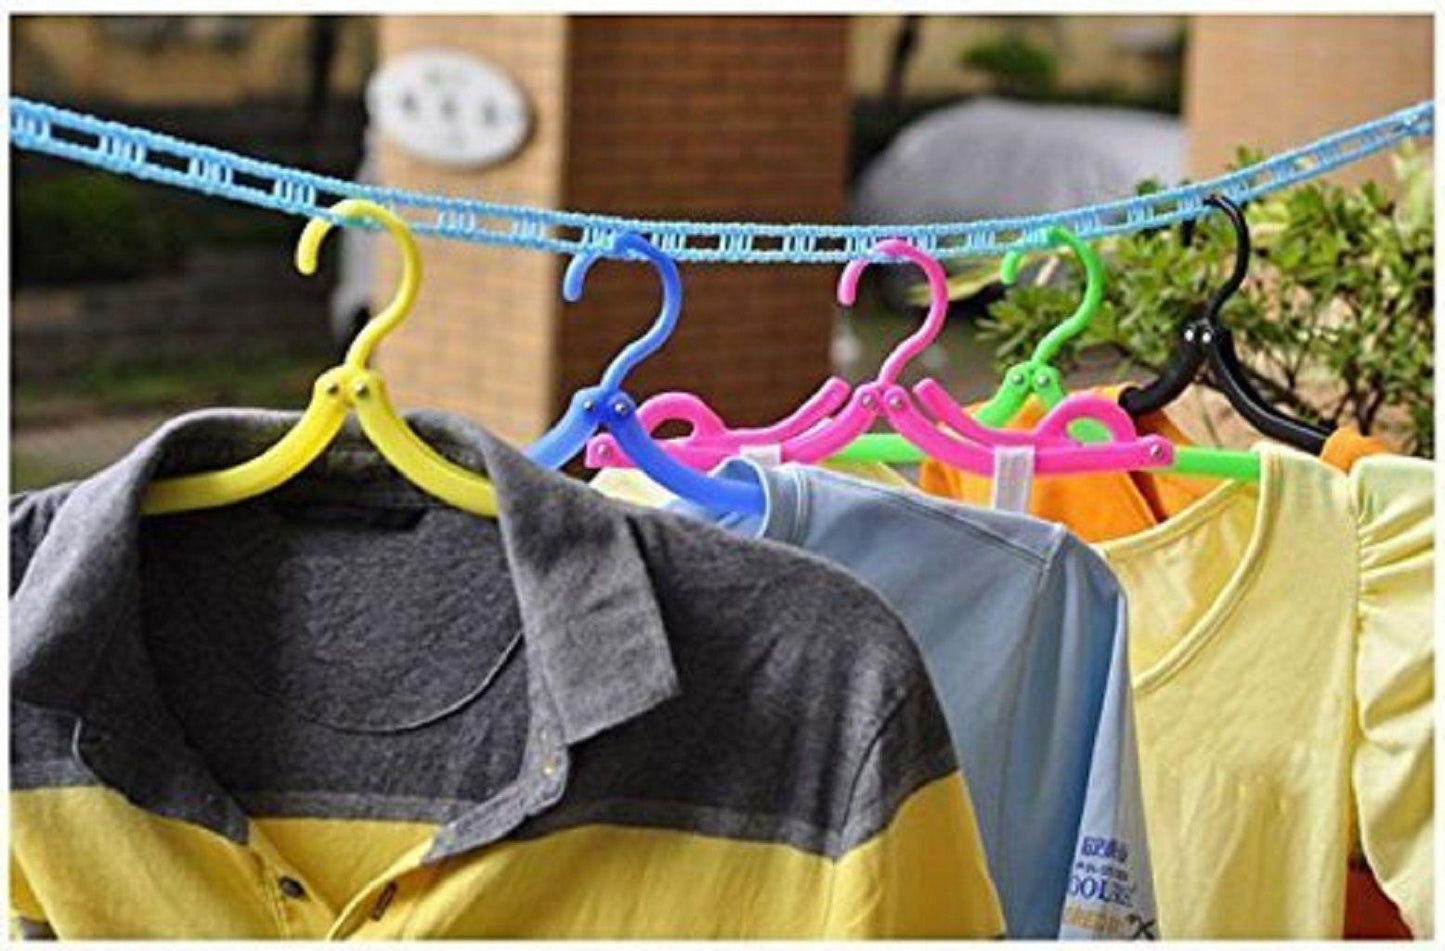 Anti-Slip Clothes Washing Line Drying Nylon Rope with Hooks